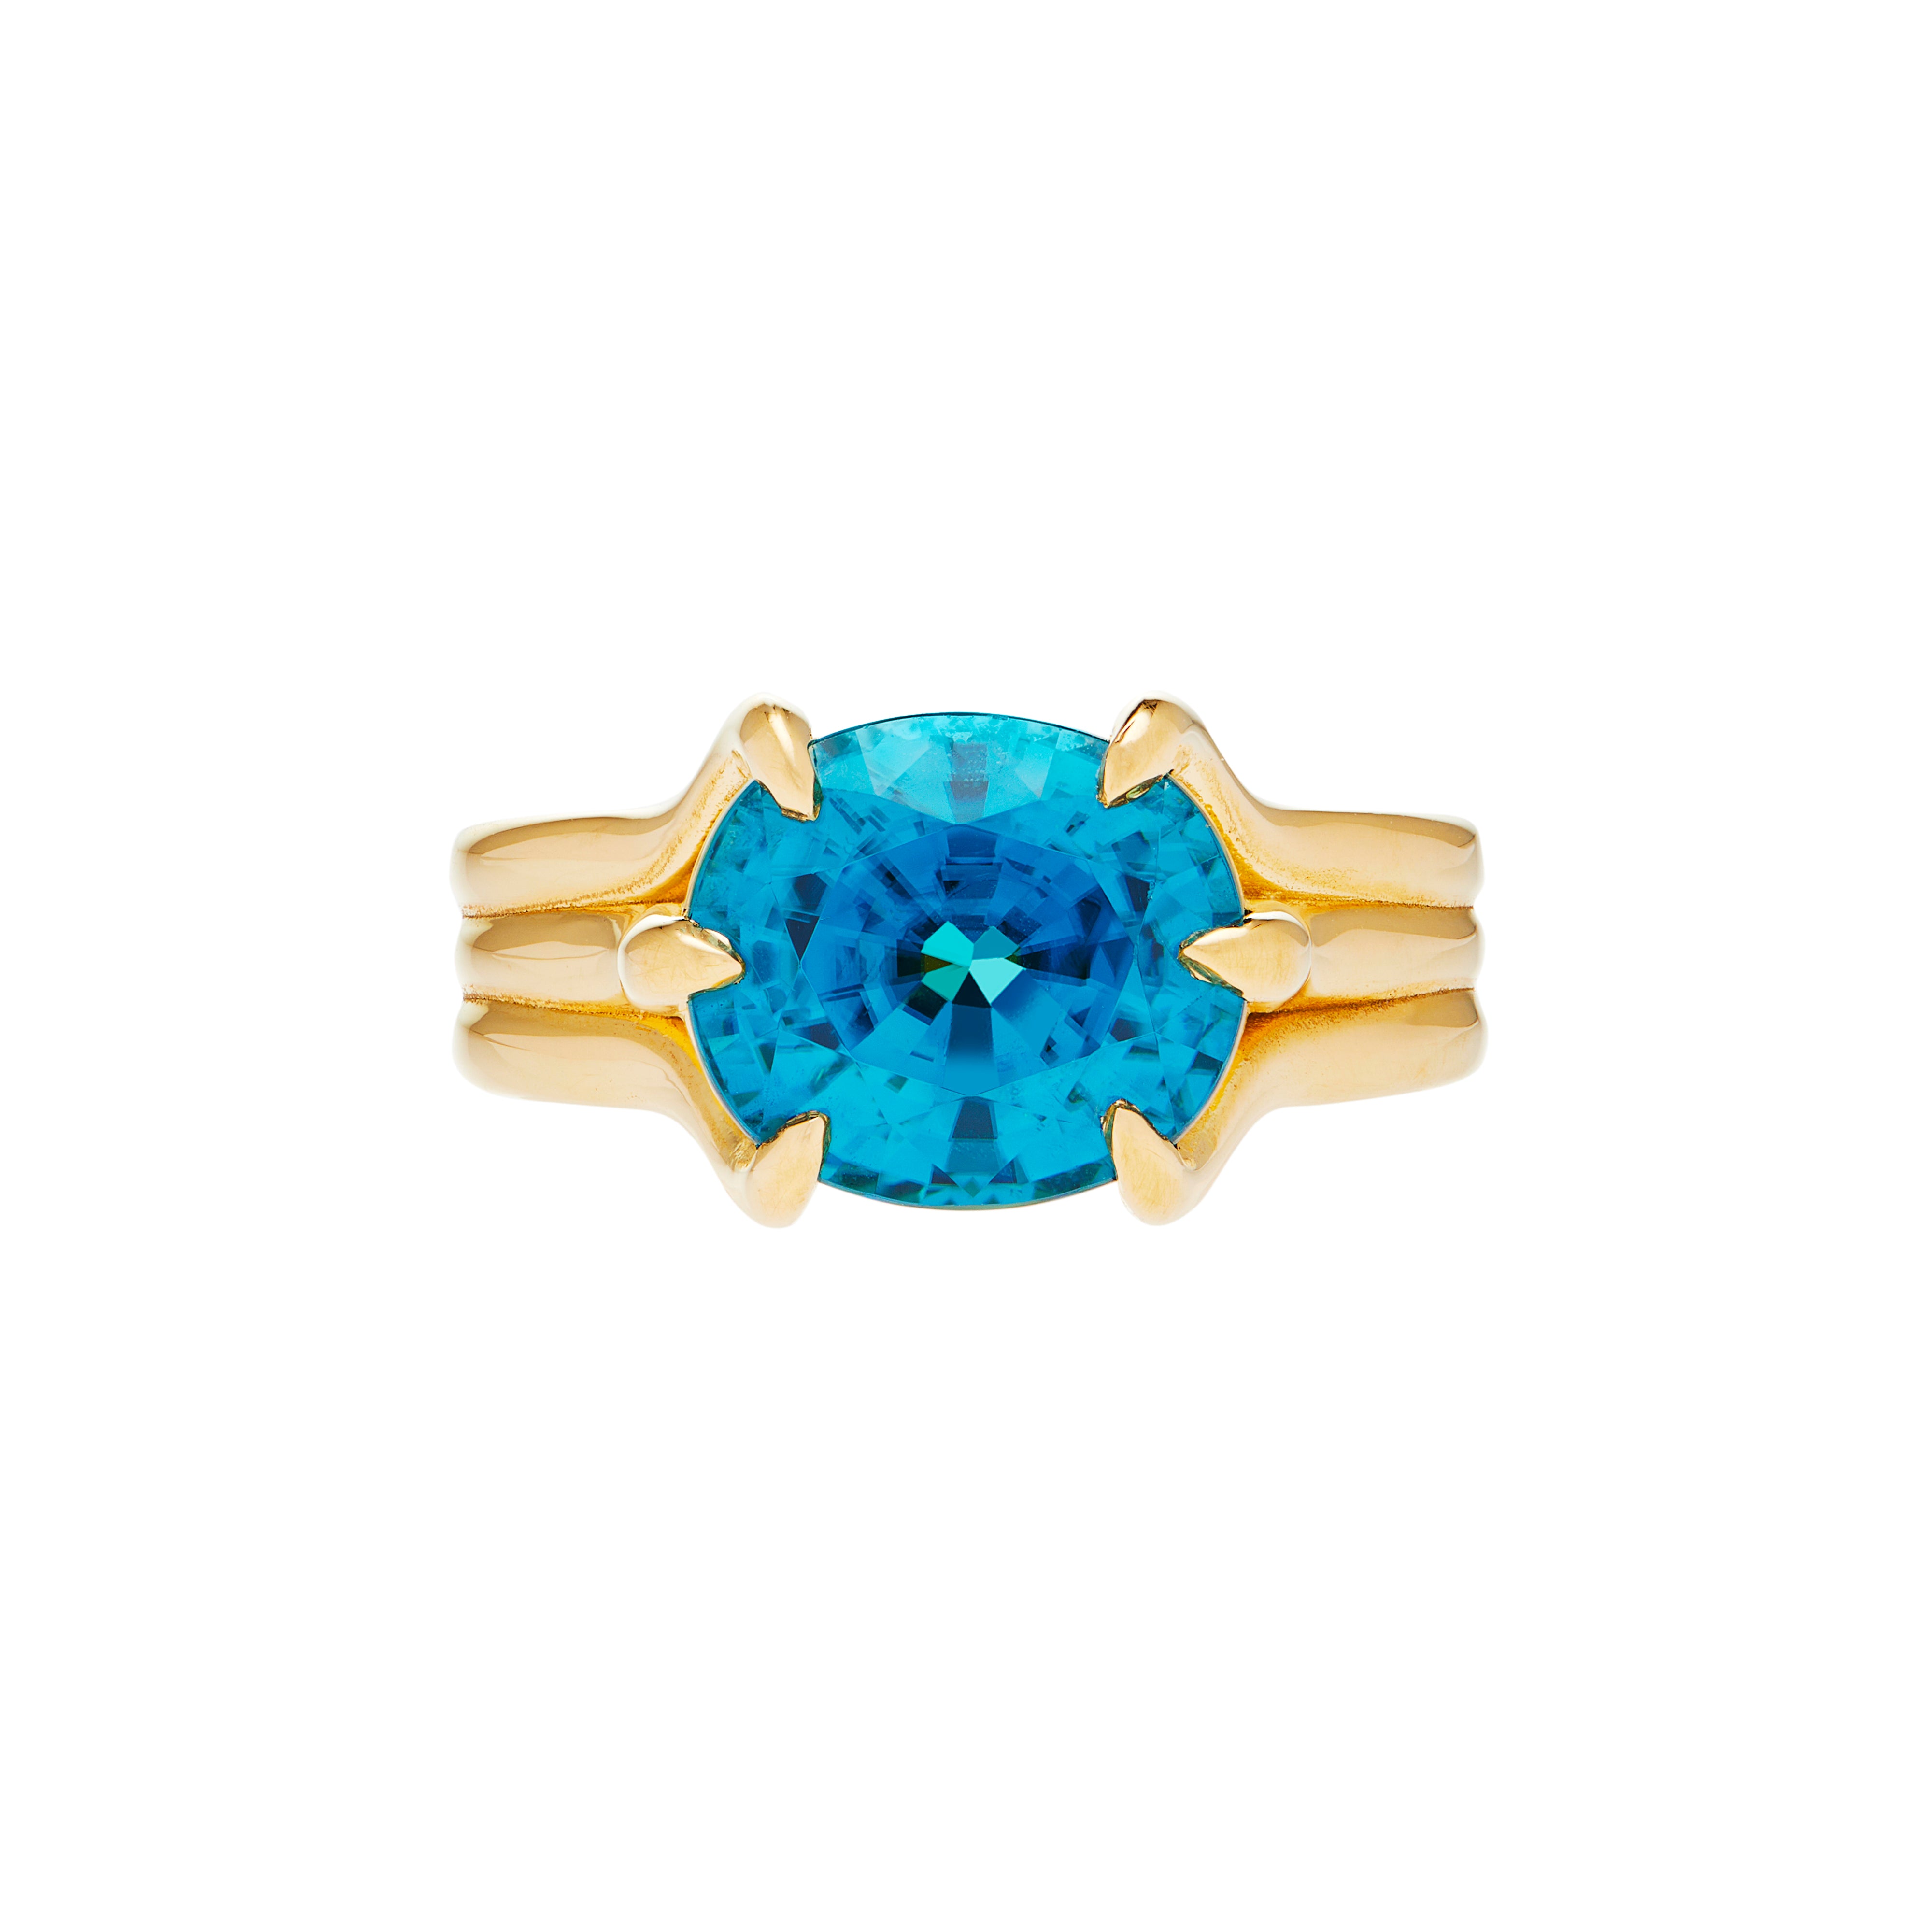 Clementine Vivid Blue Zicron Ring – Rush Jewelry Design